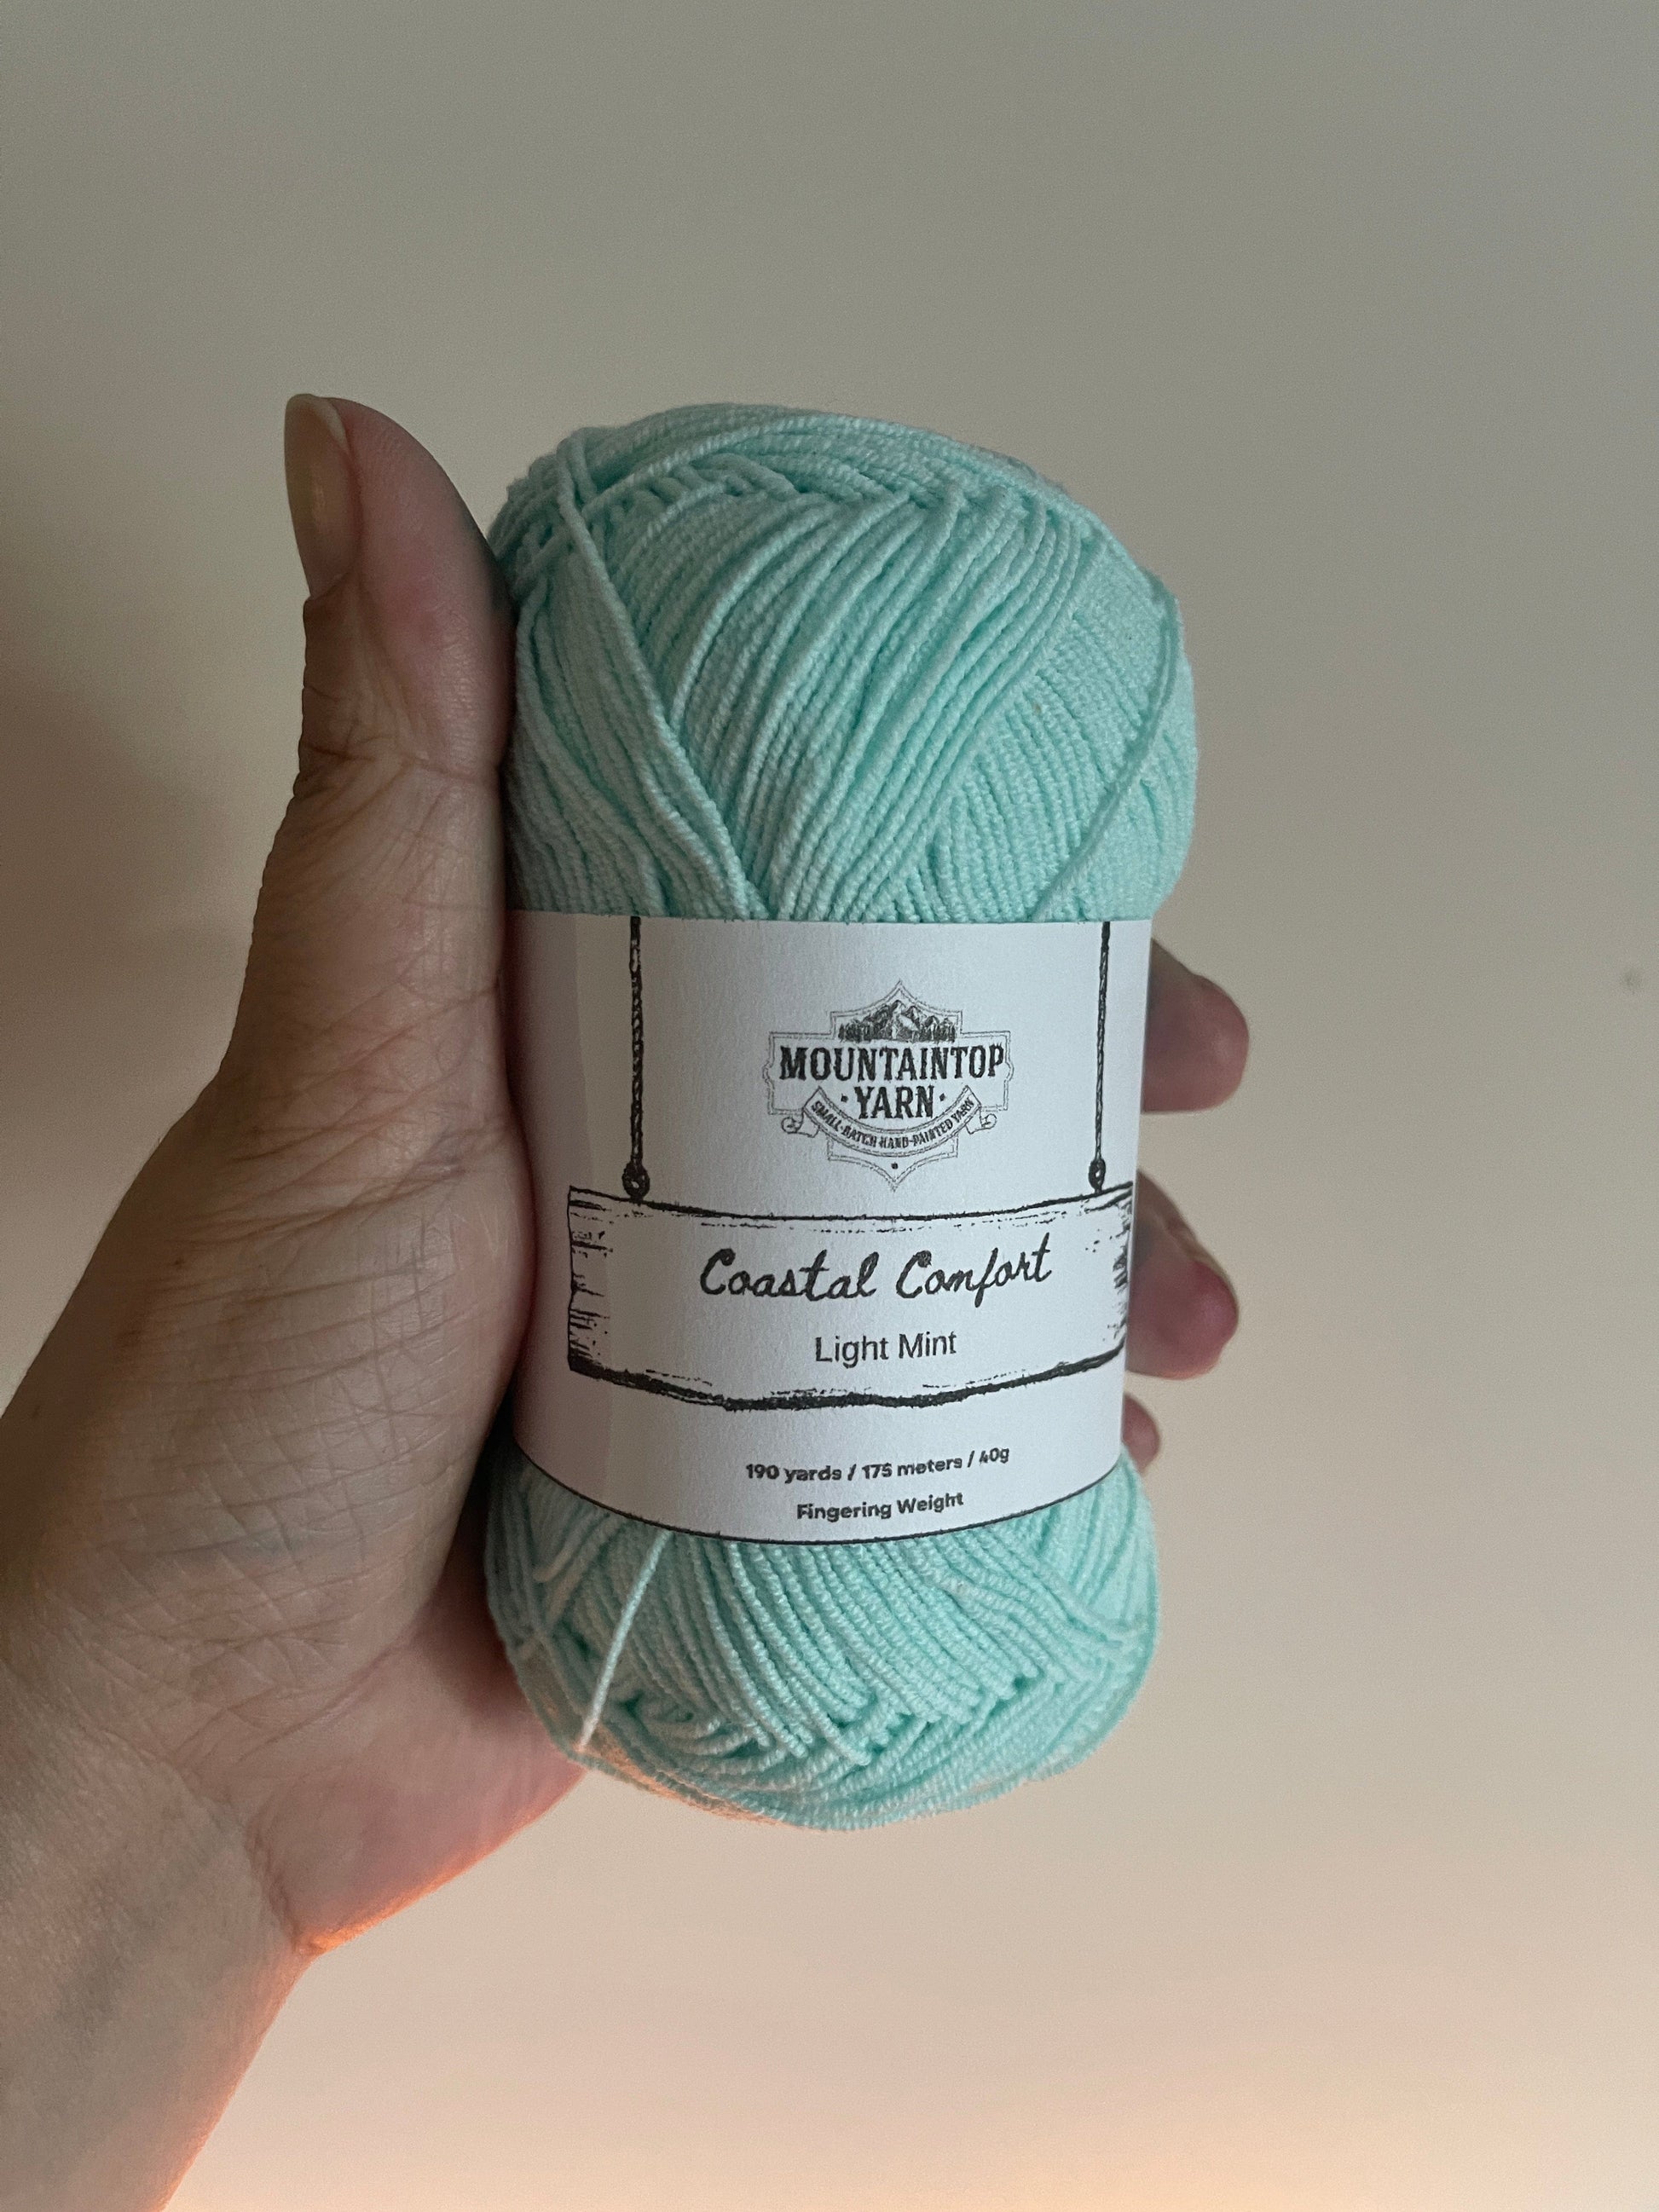 Mountaintop Yarn Light Mint Coastal Comfort - Cotton and Acrylic Blend Yarn Yarn